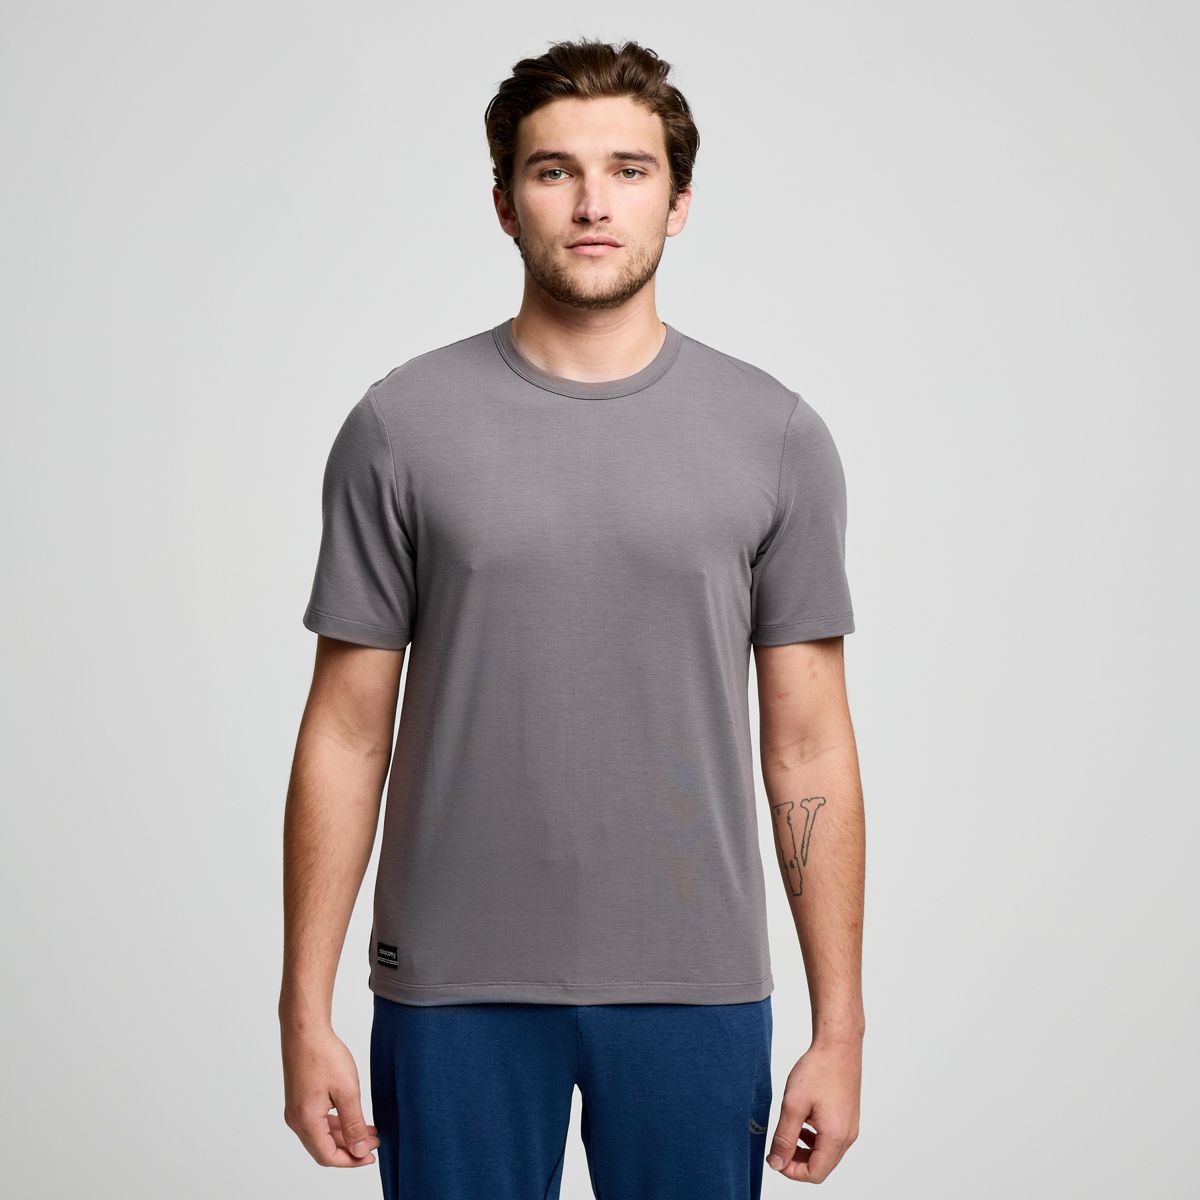 Saucony Gray Active Shirts & Tops